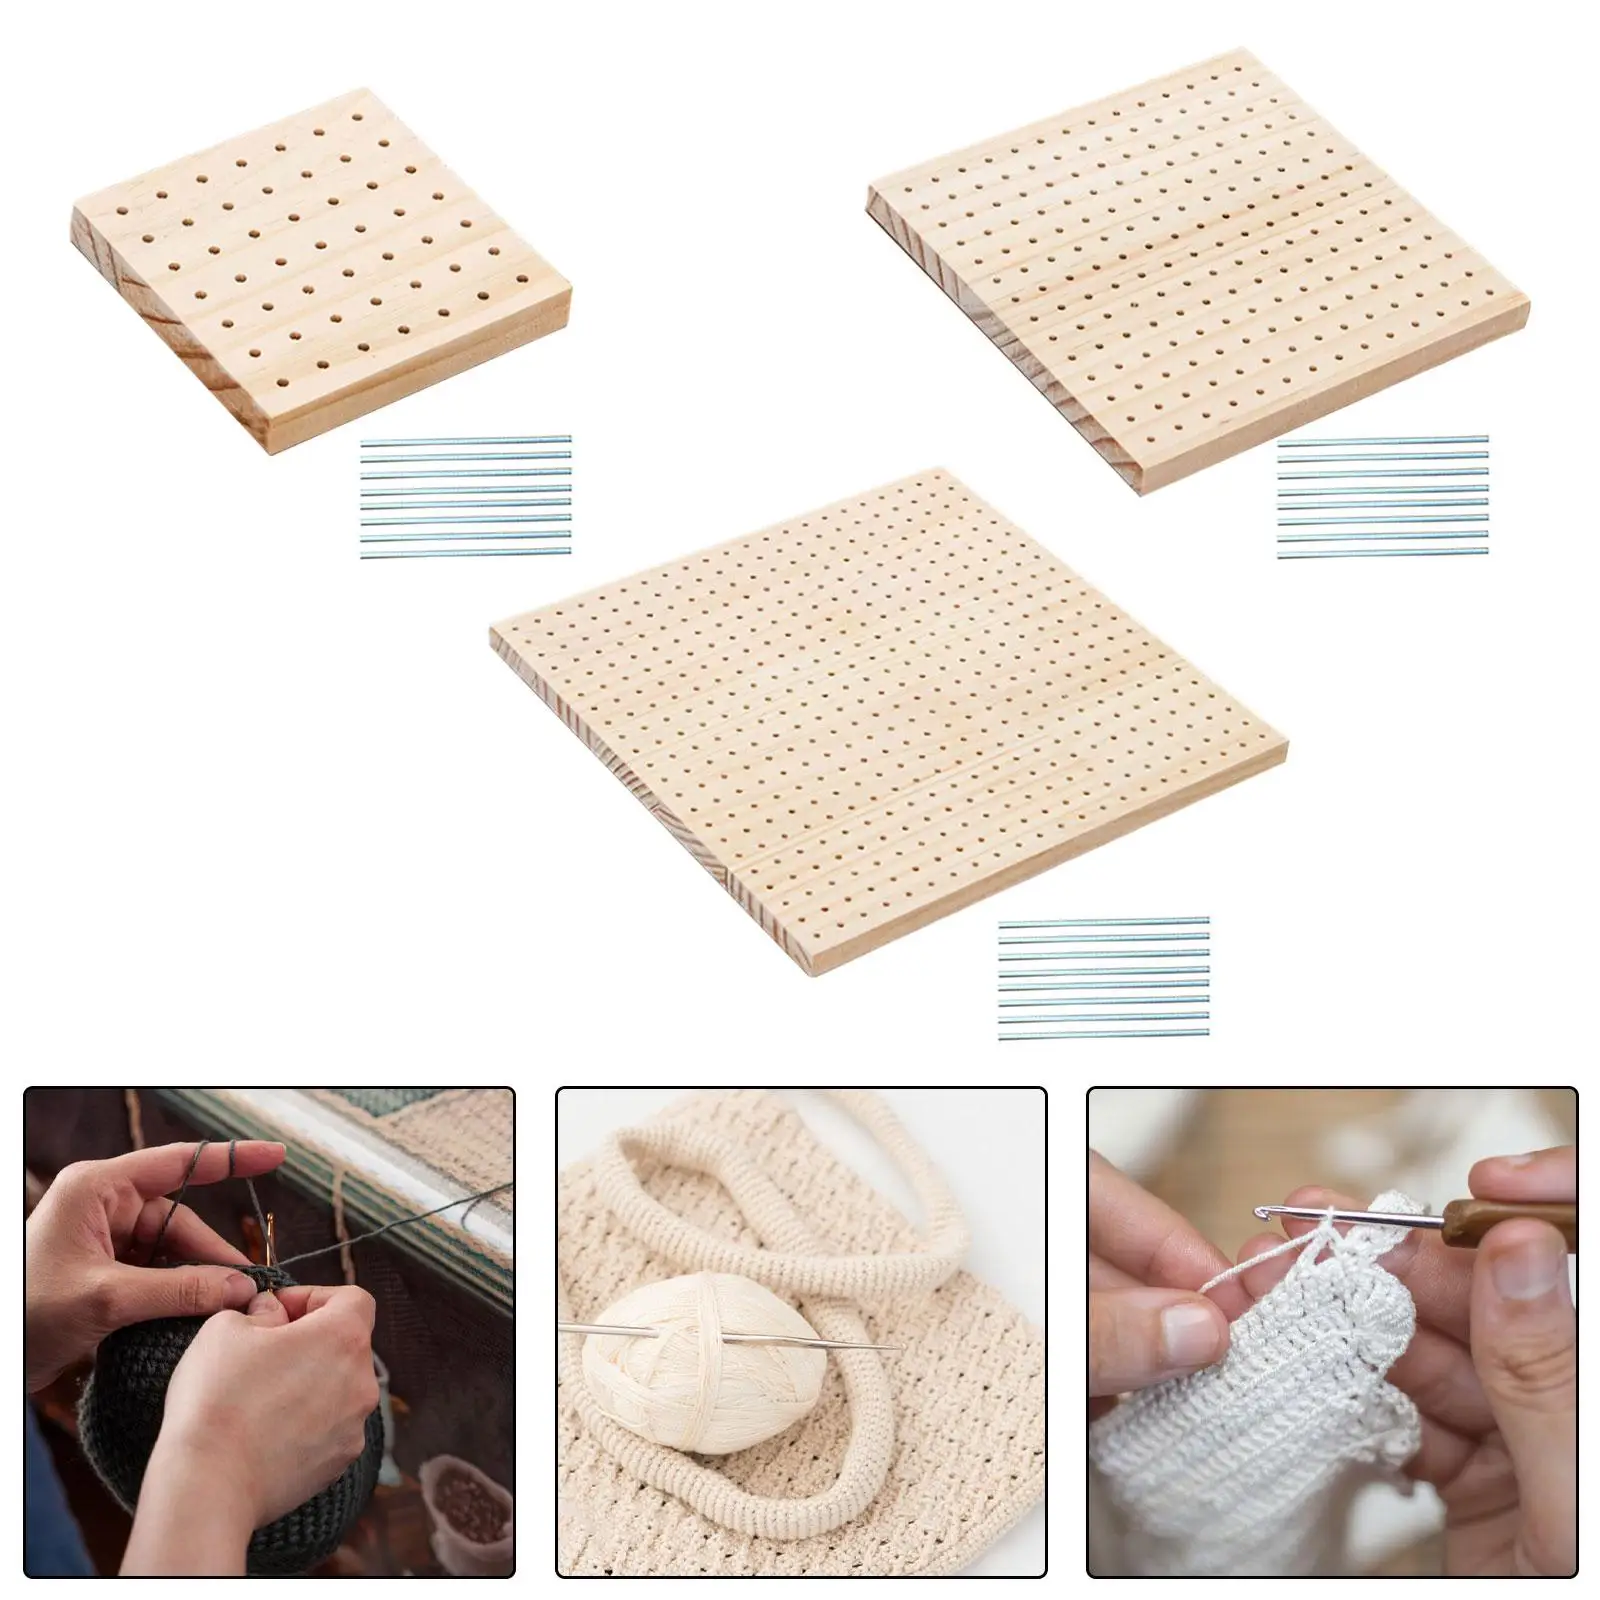 Crochet Blocking Board Pegboard for Crochet Blocking for Granny Squares DIY